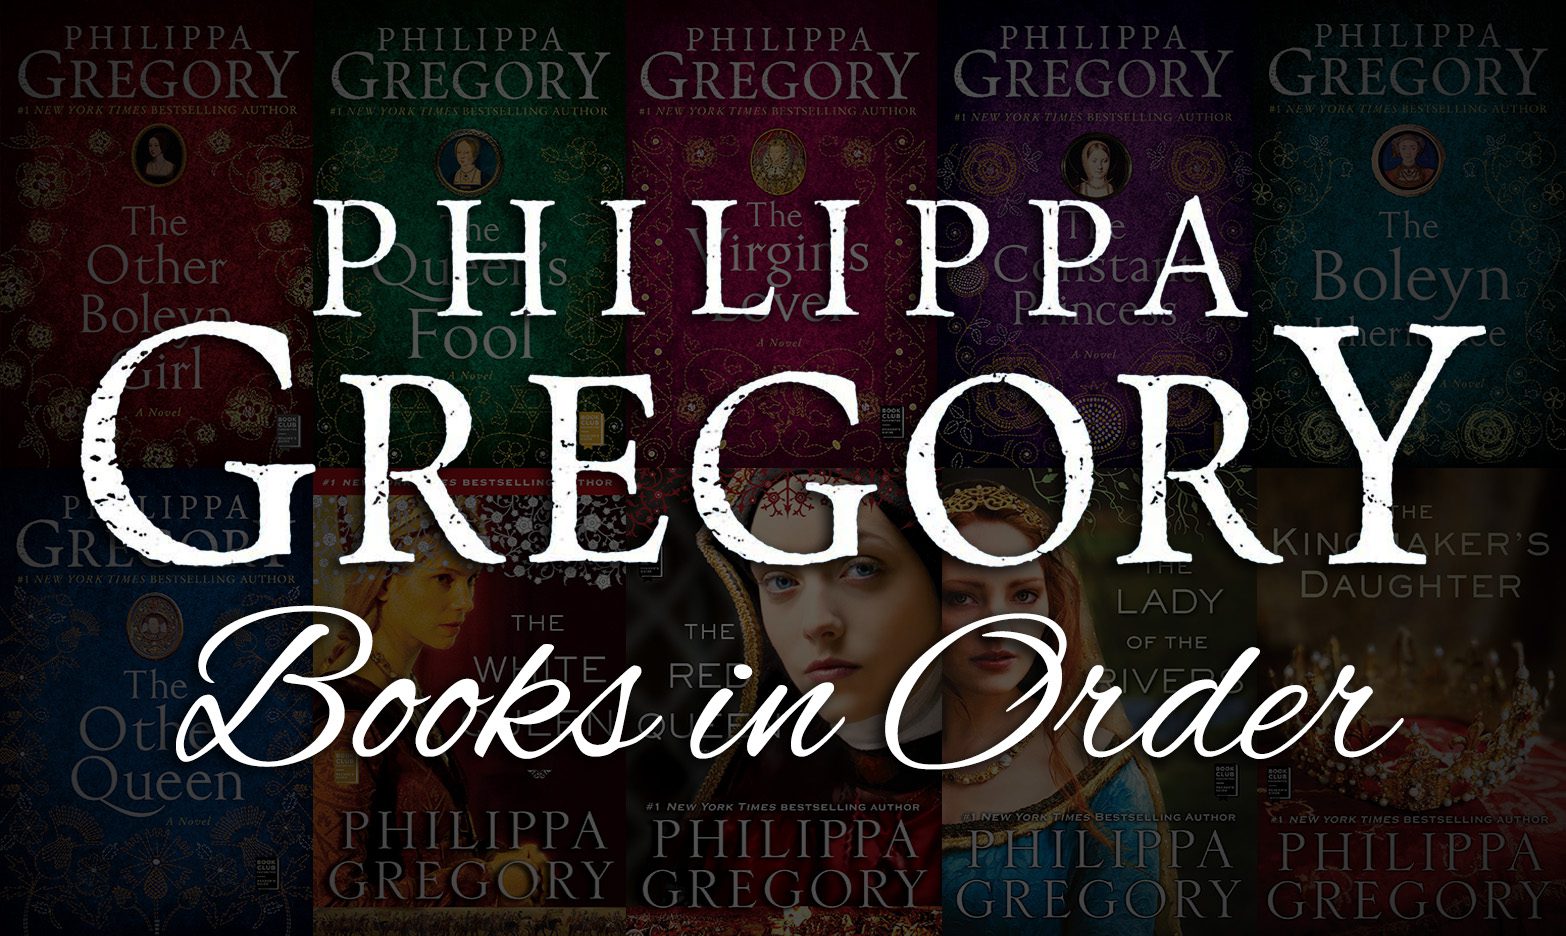 Philippa Gregory Books in Order [Complete Guide 40+ Books]